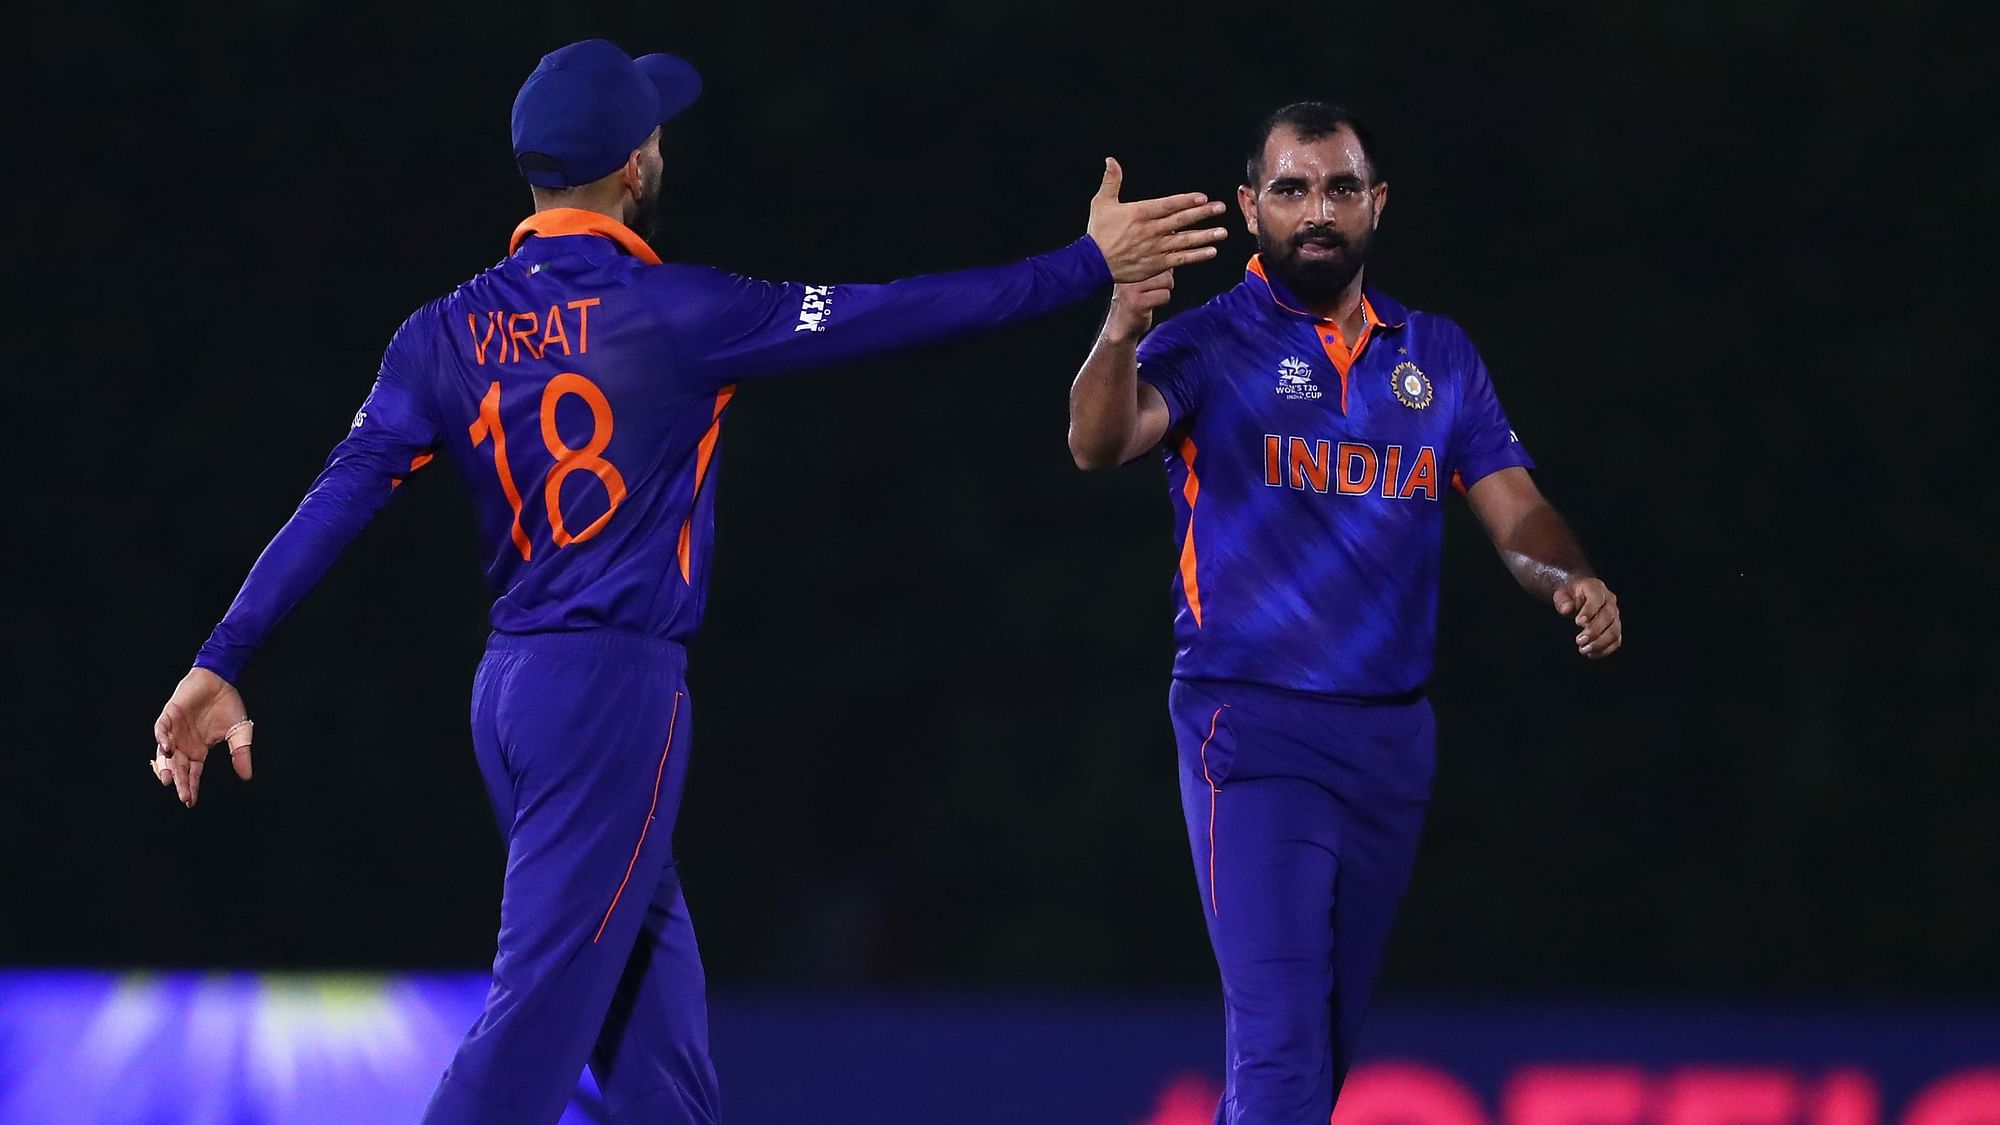 <div class="paragraphs"><p>Mohammed Shami and Virat Kohli celebrate a wicket. </p></div>